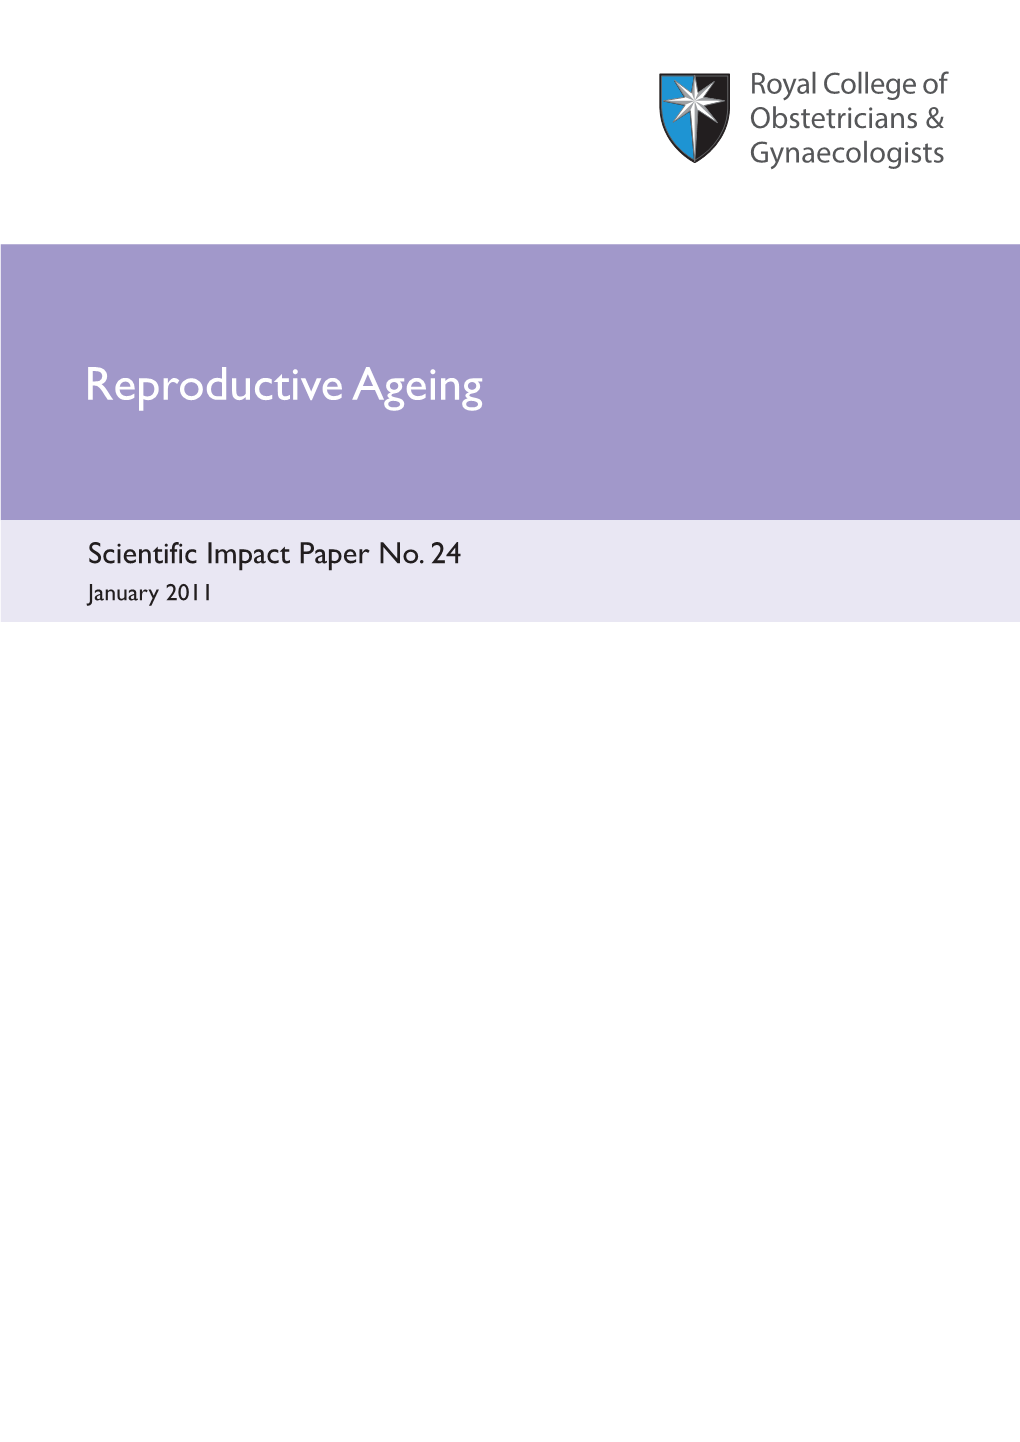 Reproductive Ageing (Scientific Impact Paper No